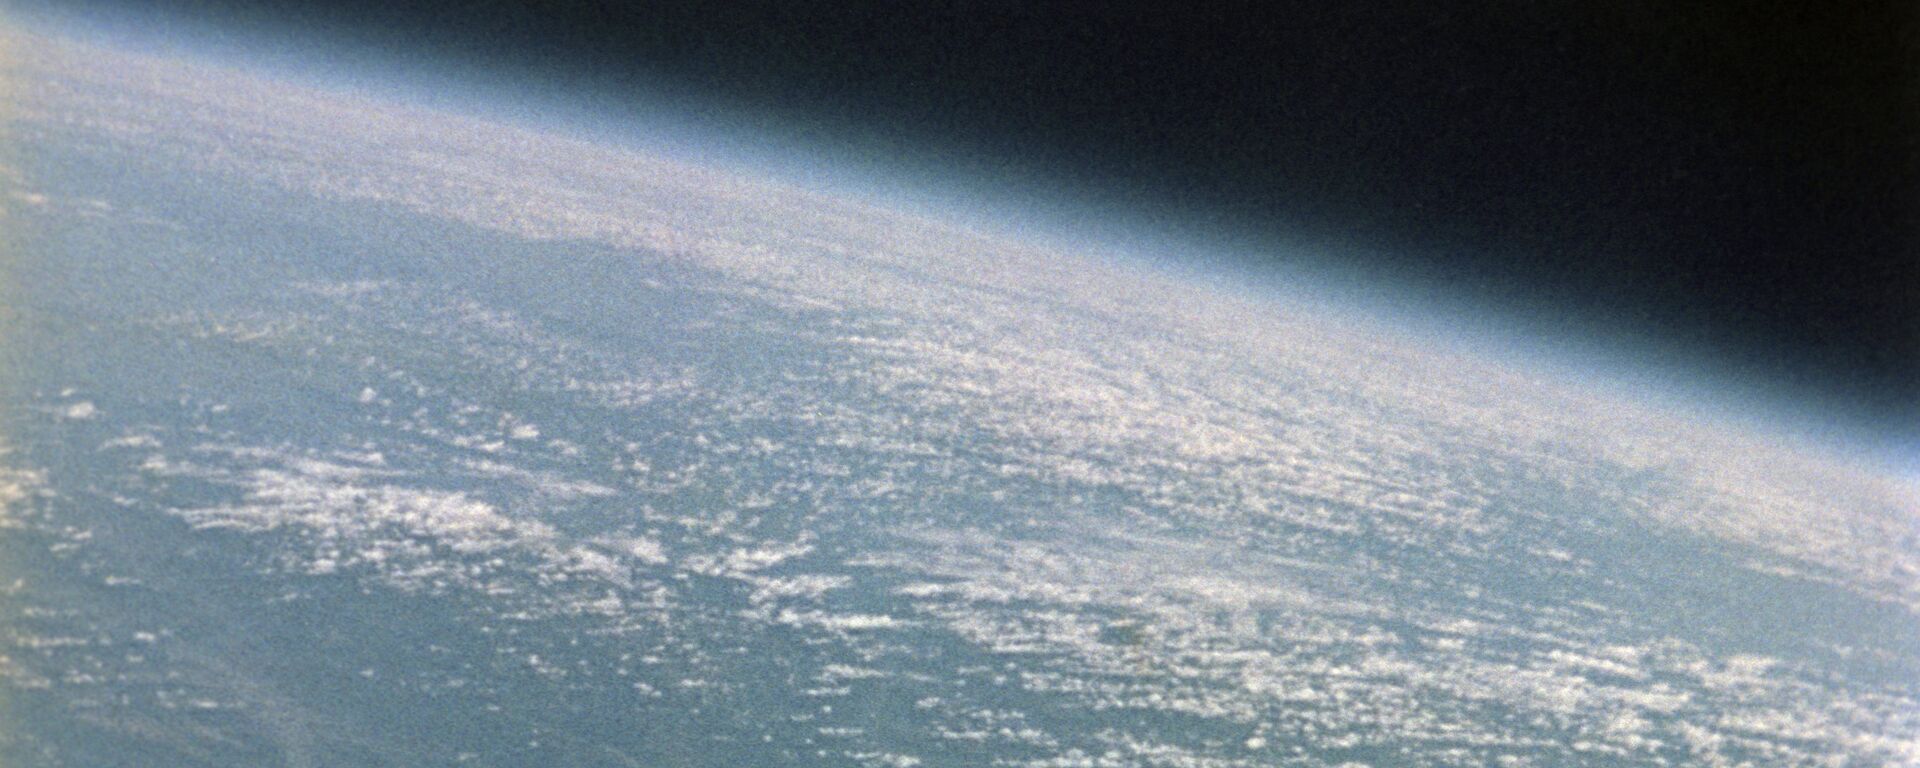 Снимок Земли из космоса - Sputnik Արմենիա, 1920, 07.03.2021